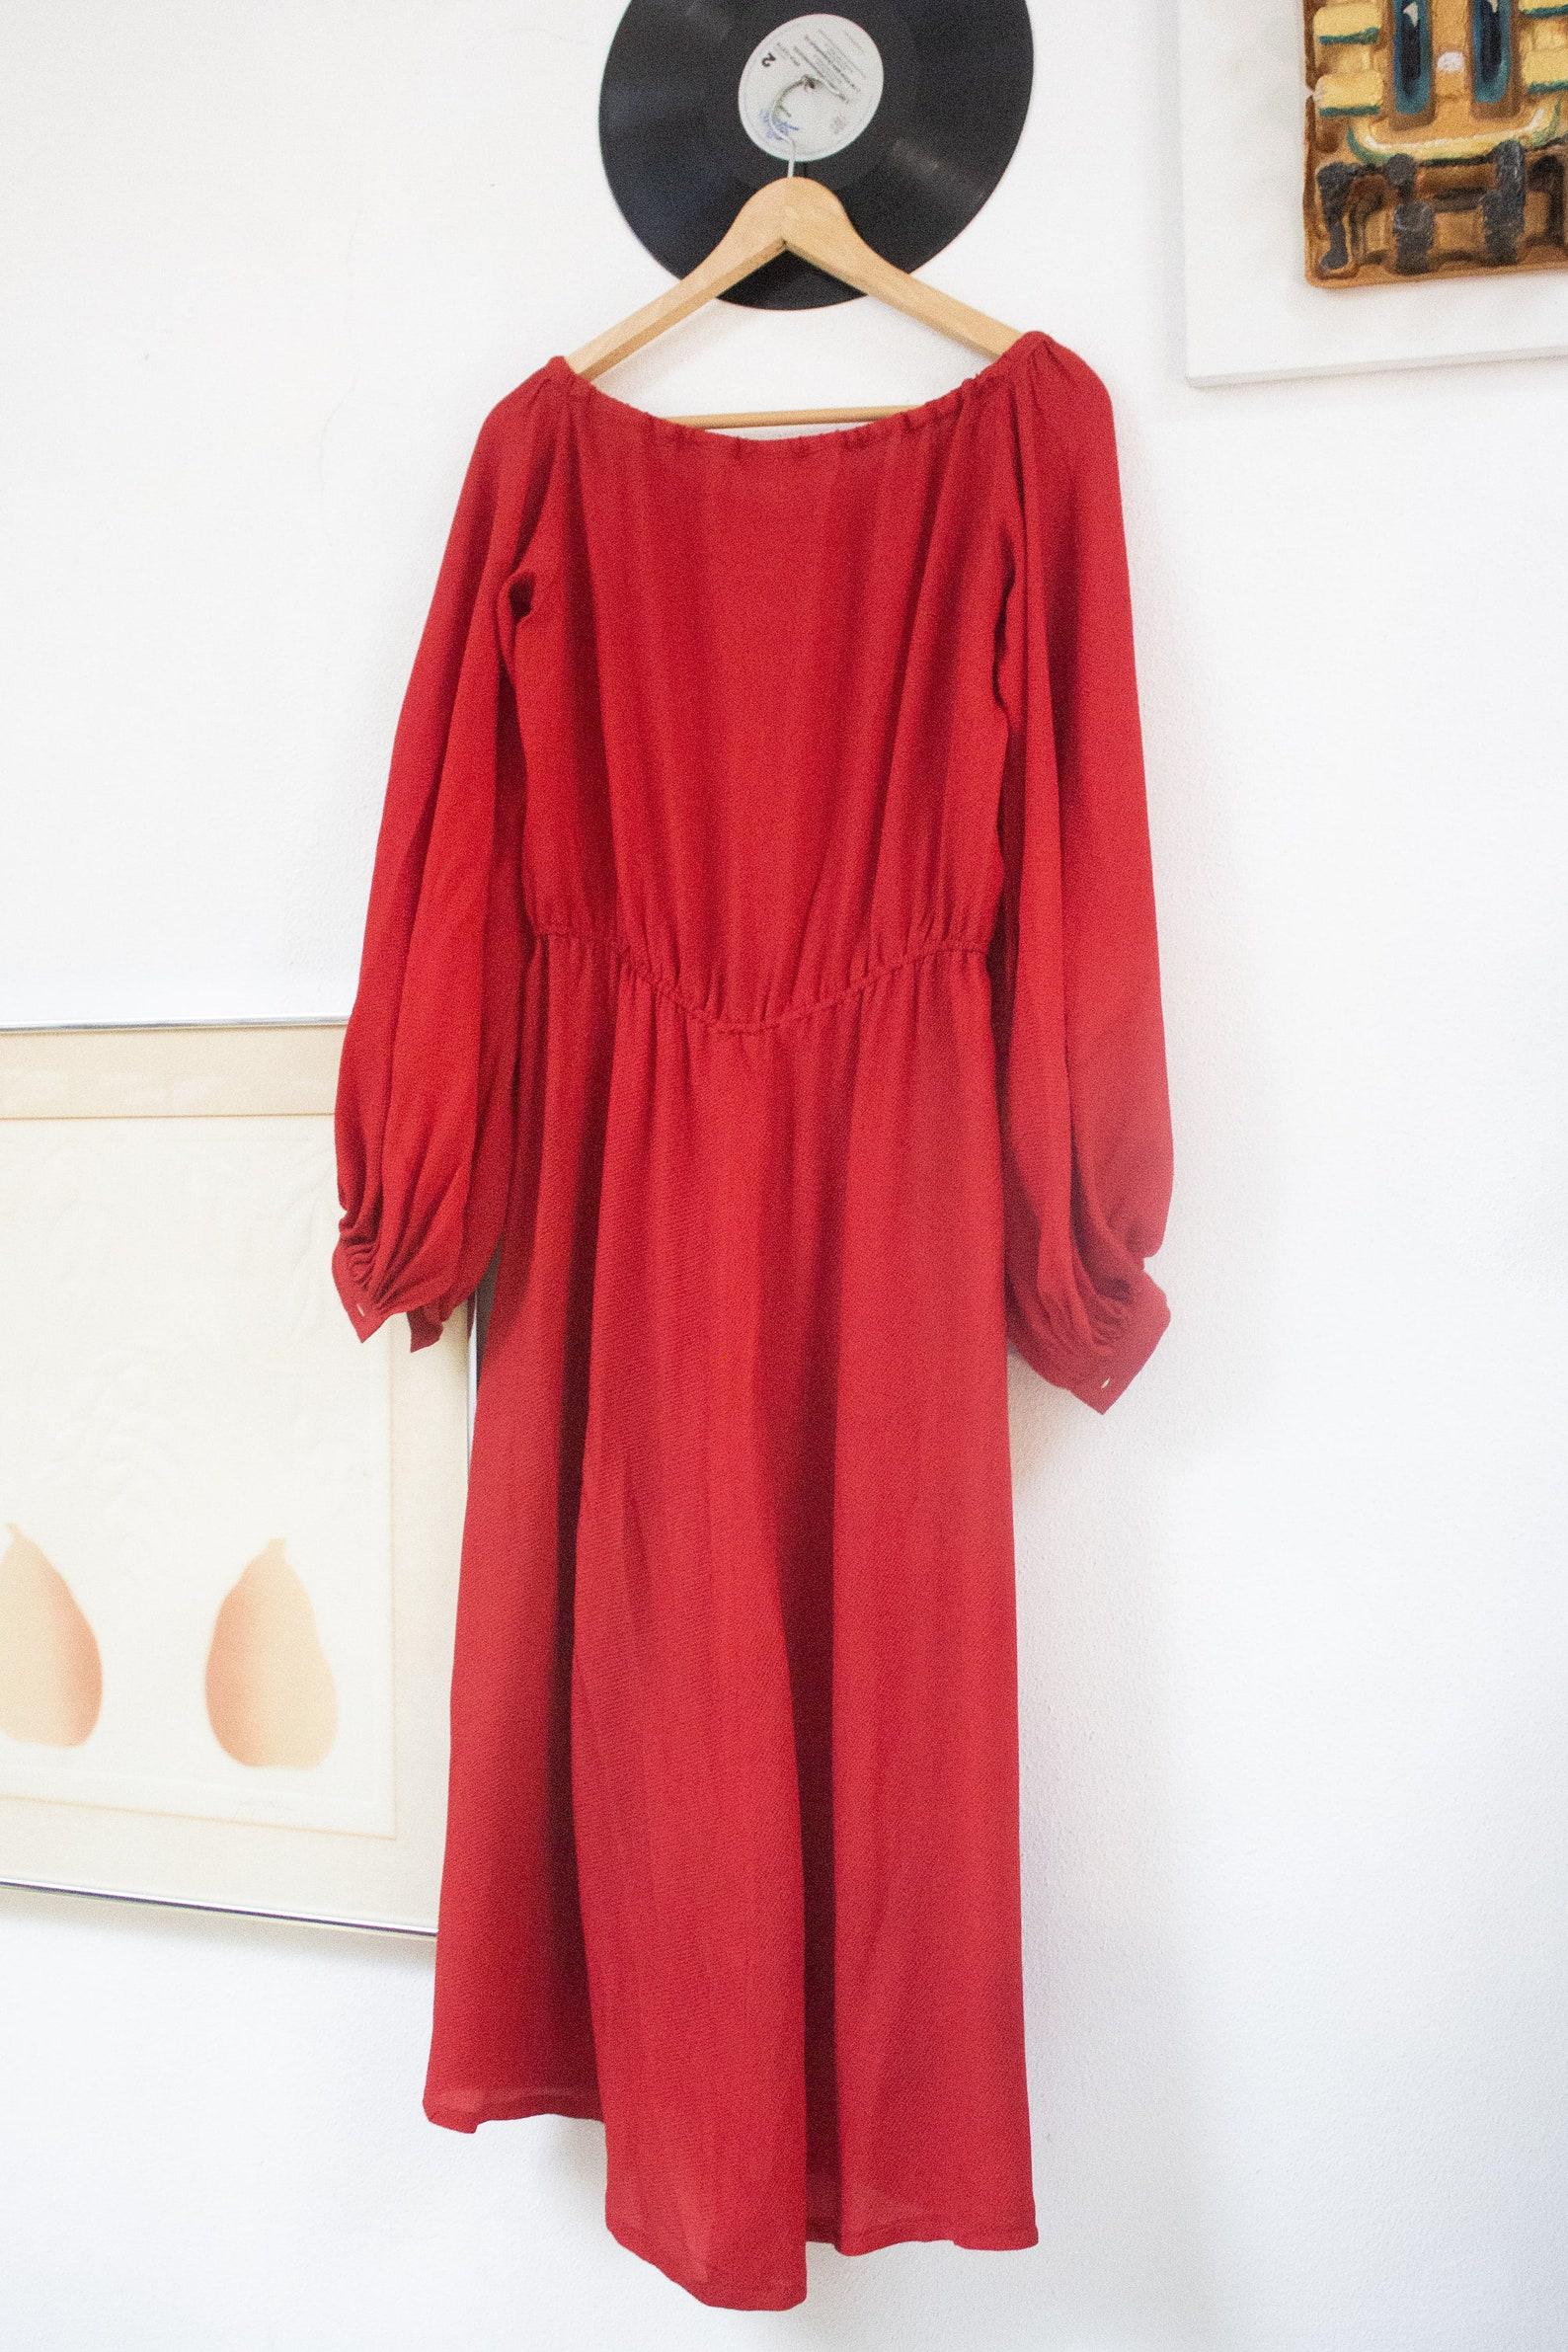 Saint Laurent Rive Gauche 1977 red silk off shoulders midi dress bishop sleeves  For Sale 1